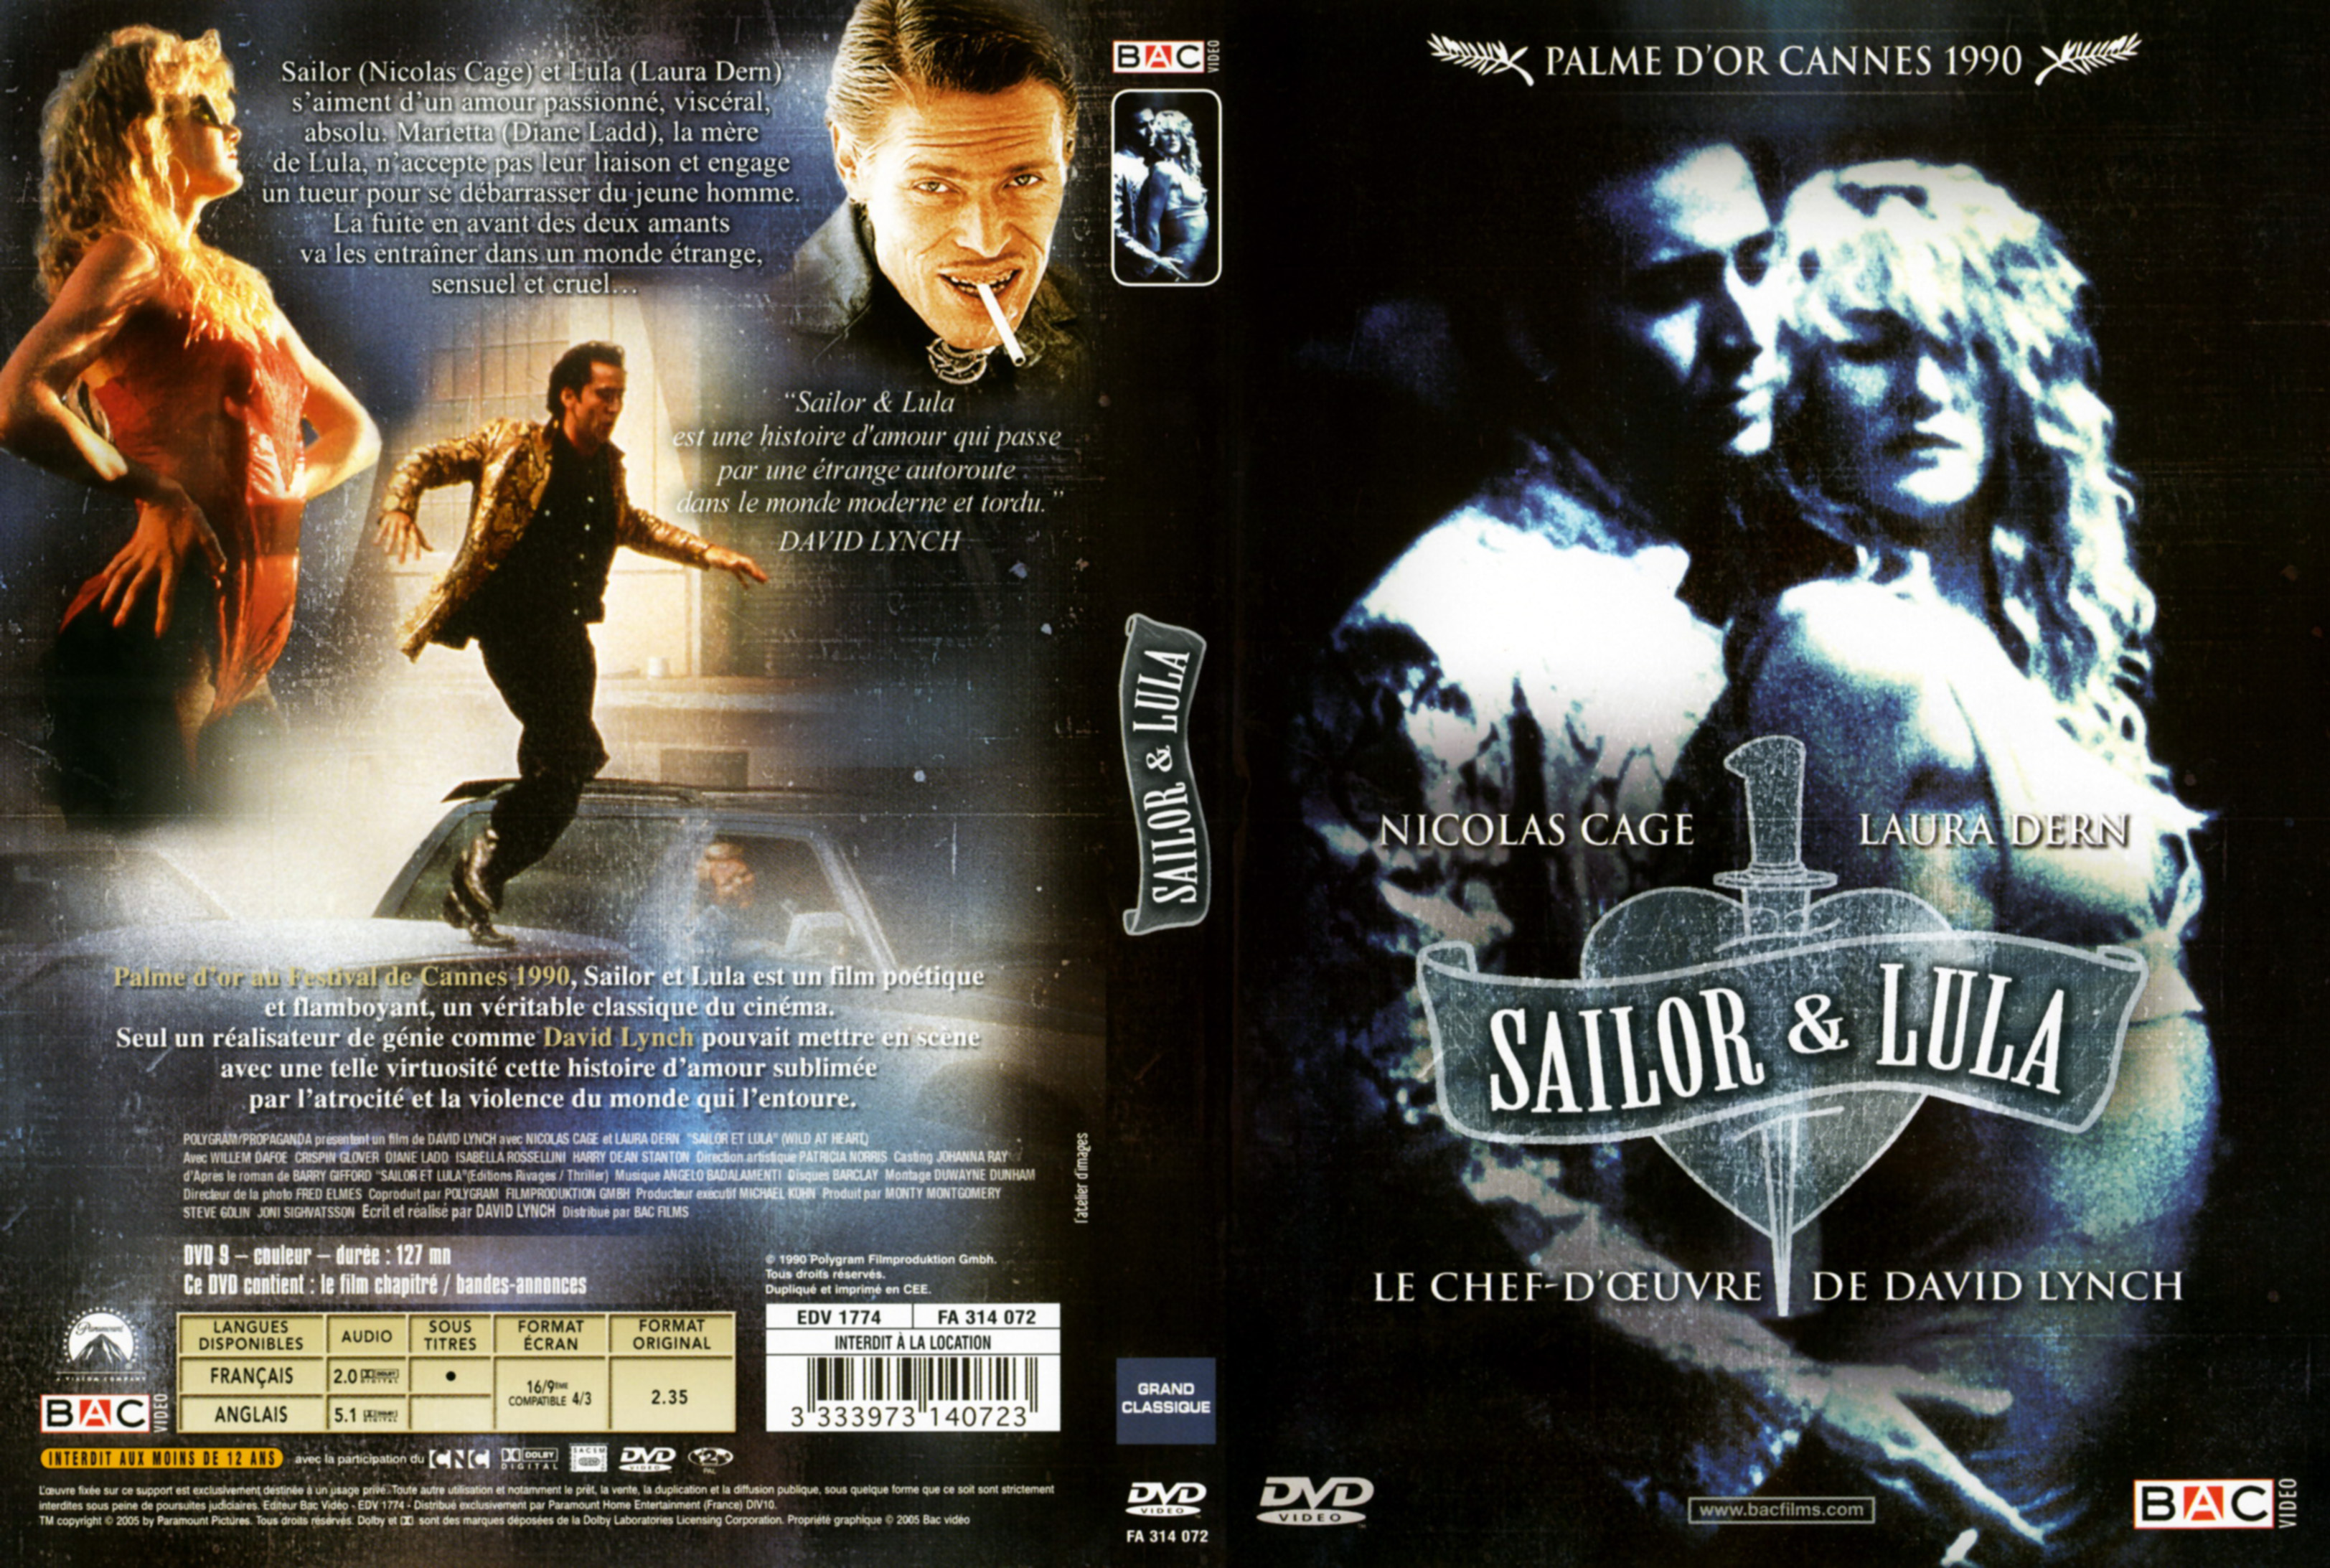 Jaquette DVD Sailor et Lula v2